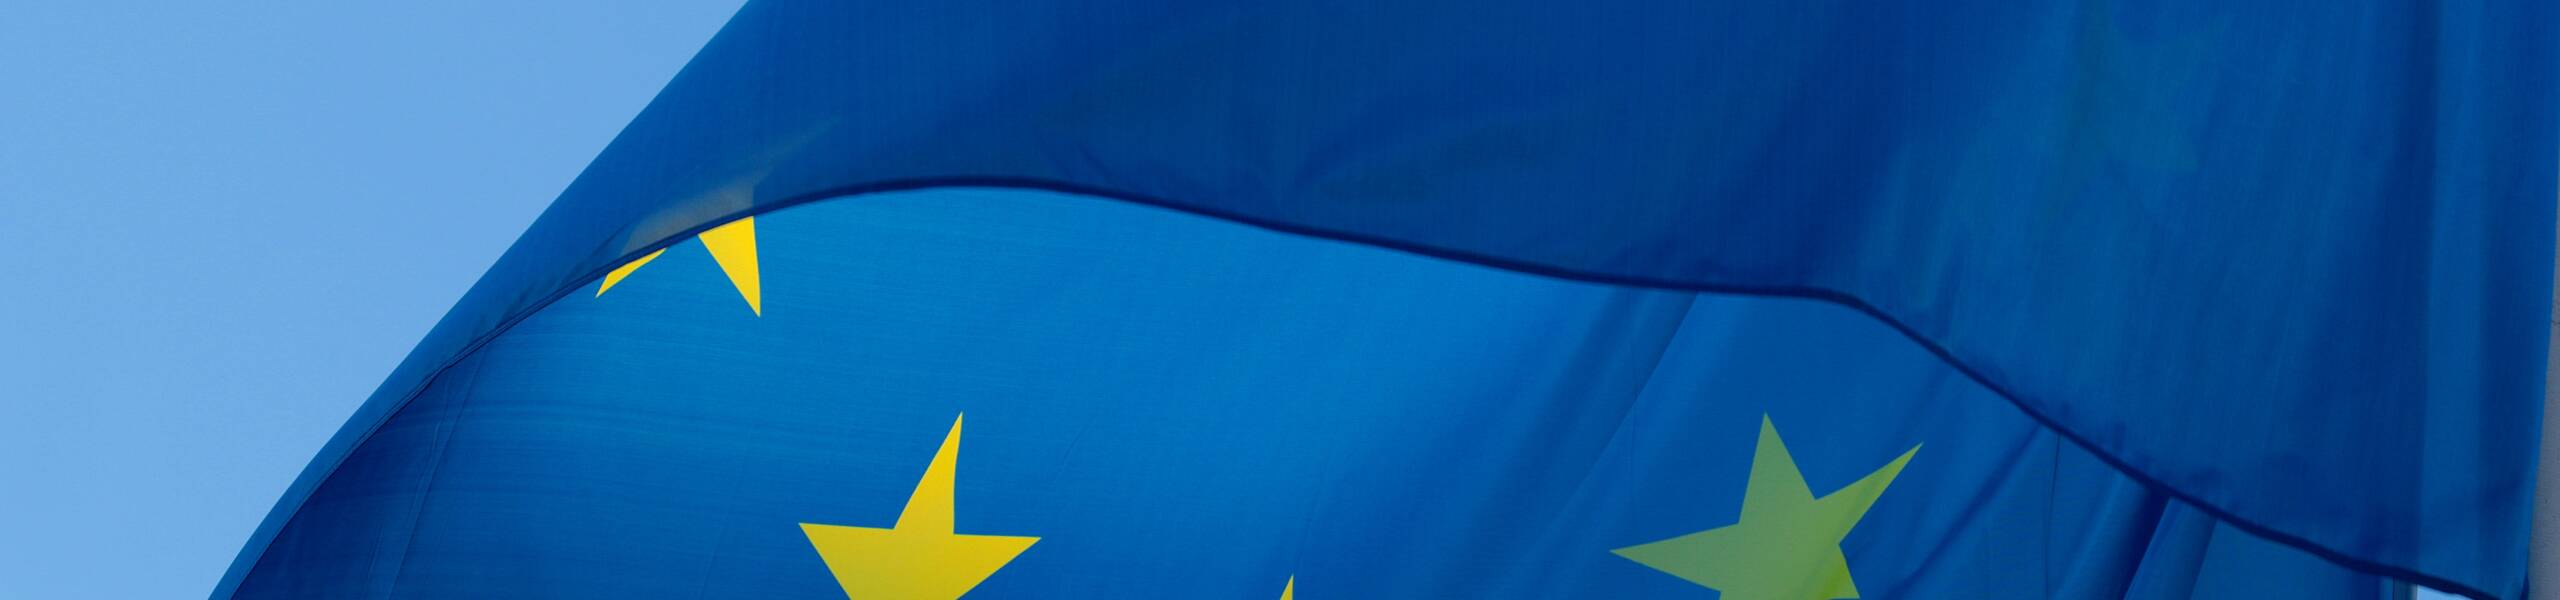 Final CPI y/y และ ECB President Draghi Speaks ของยูโรโซนในวันนี้ EUR หารับต้านใหม่